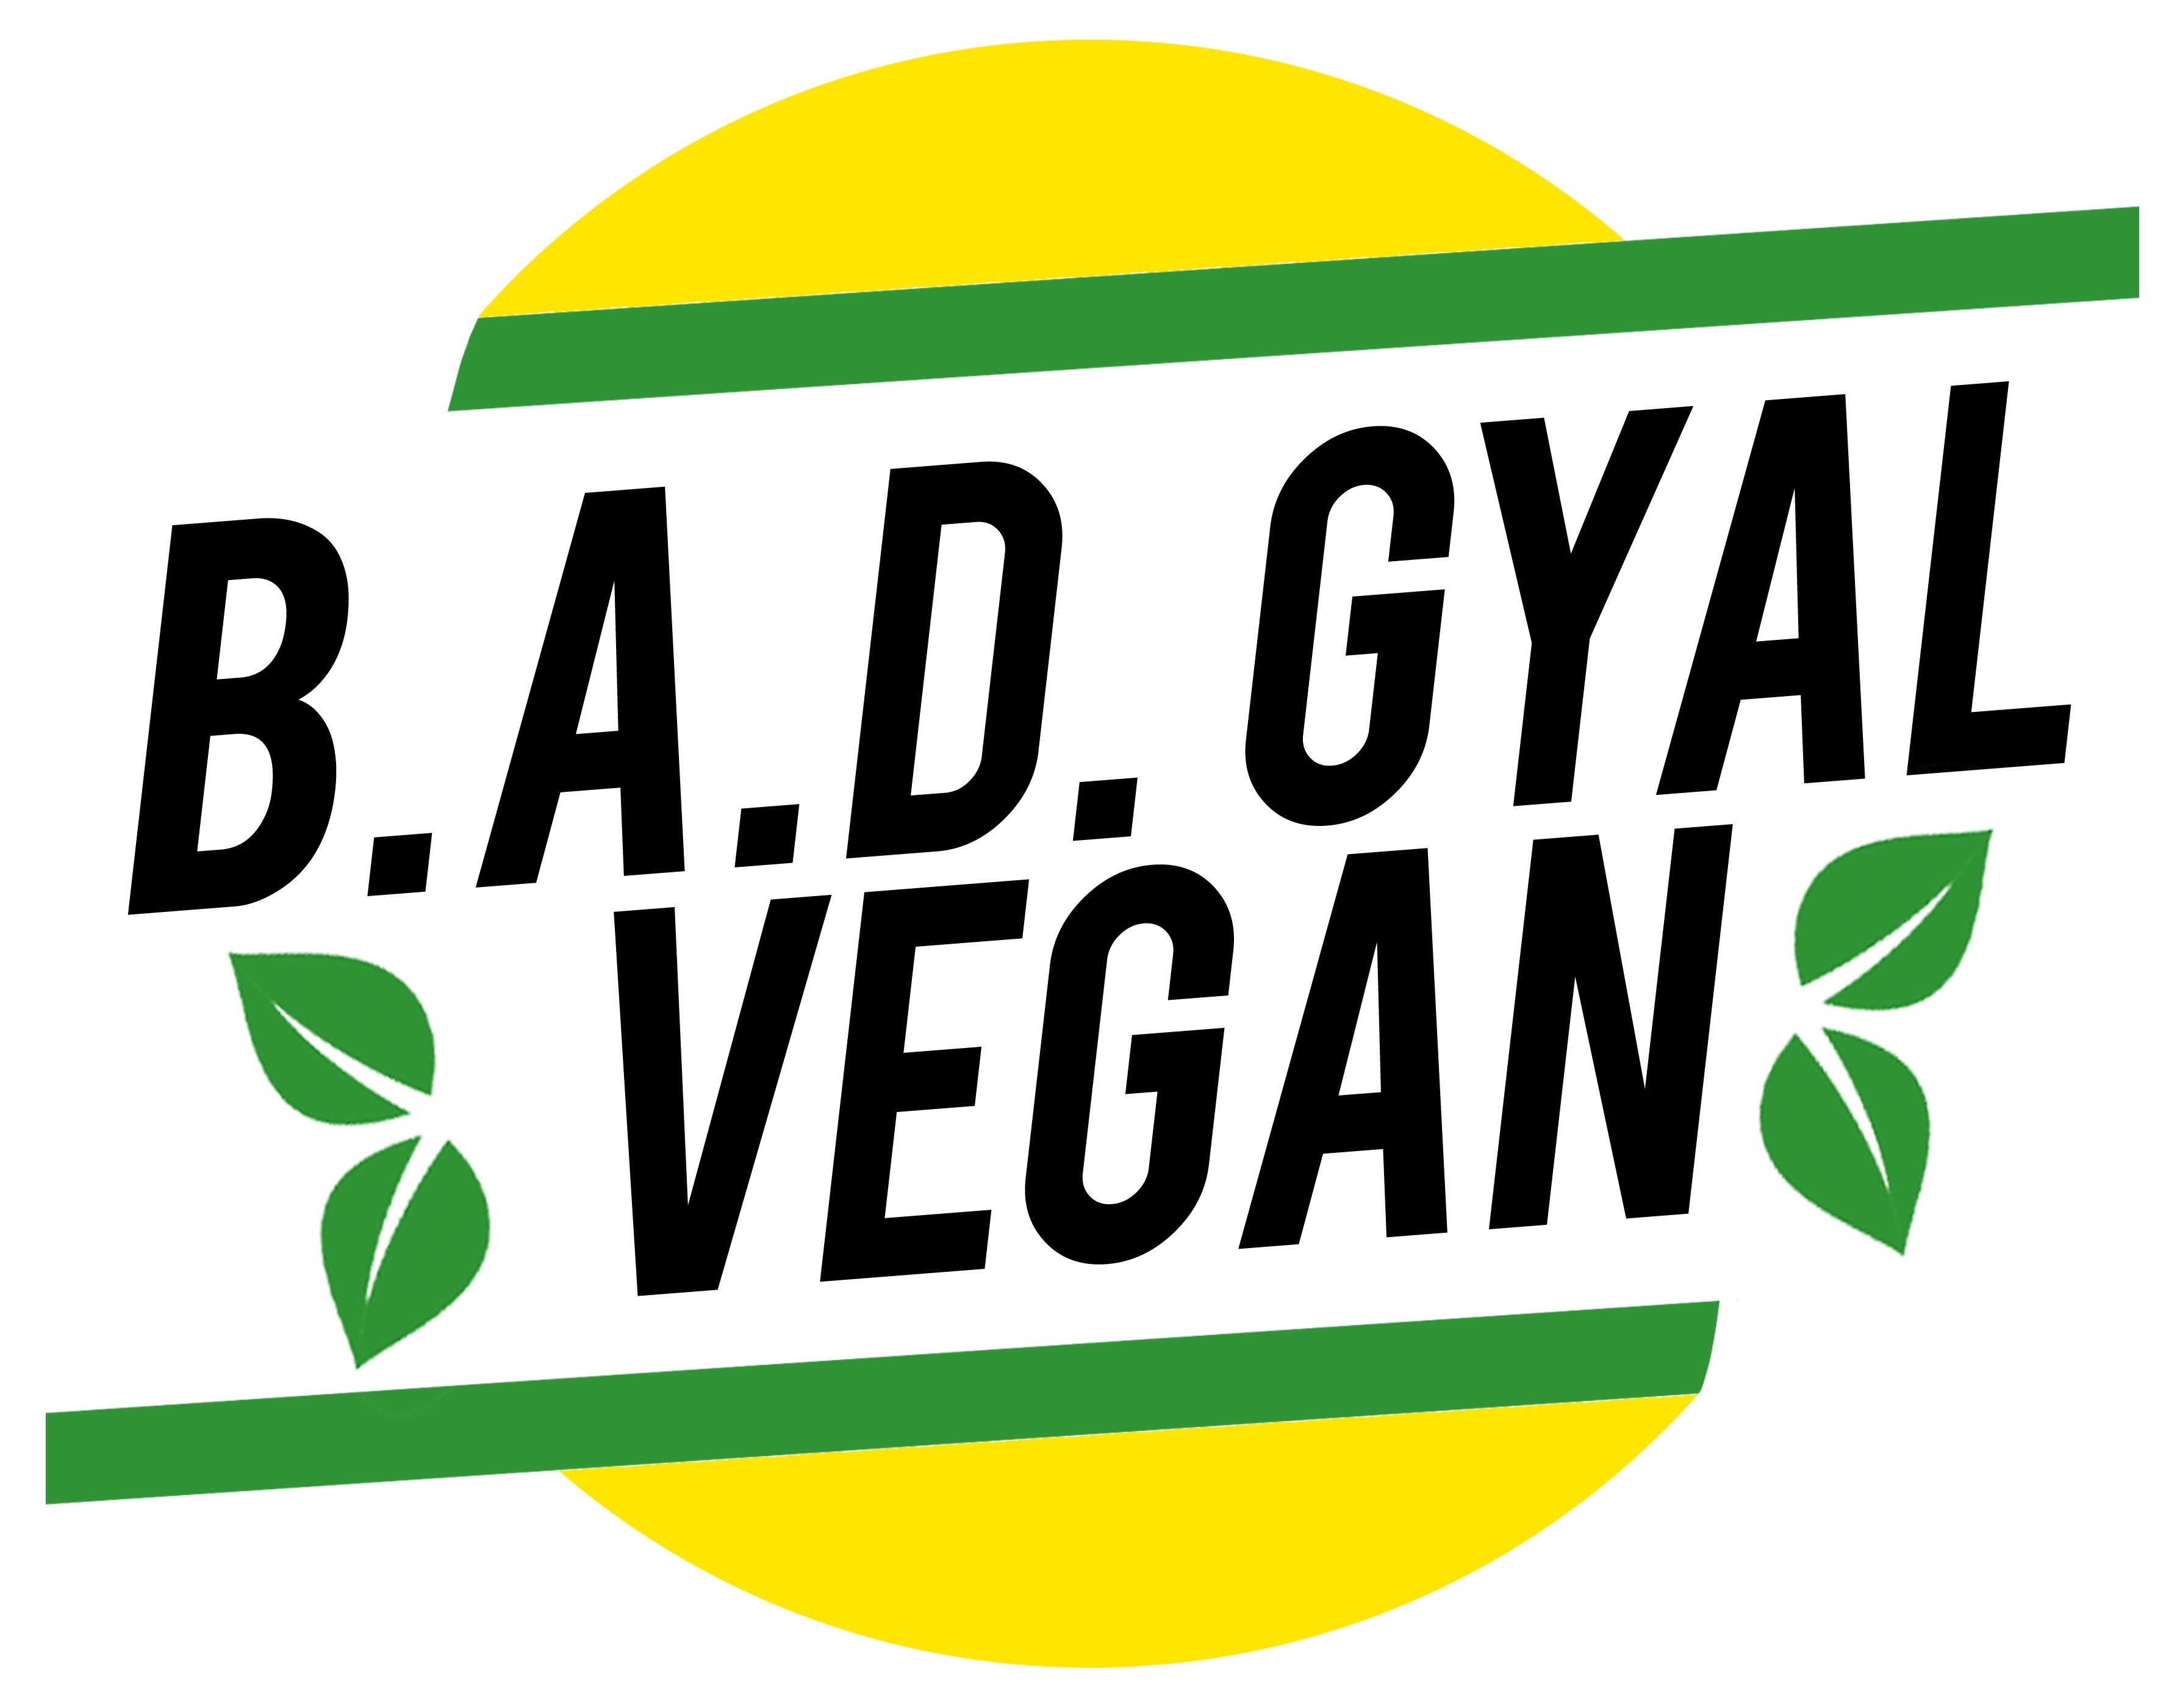 B.A.D. Gyal Vegan